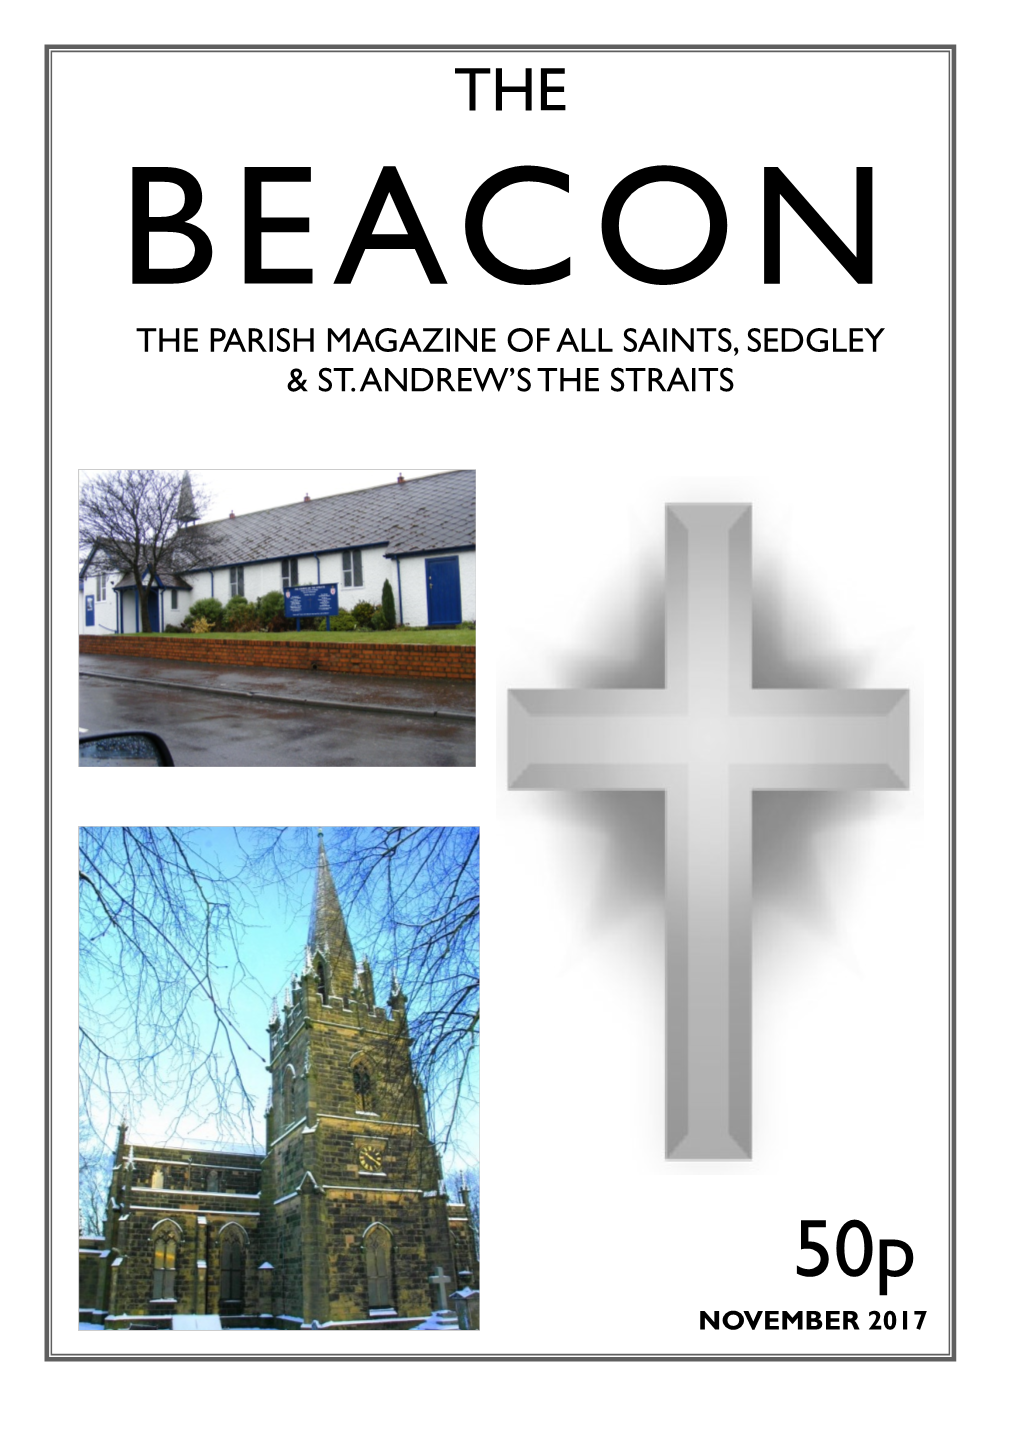 The Parish Magazine of All Saints, Sedgley & St